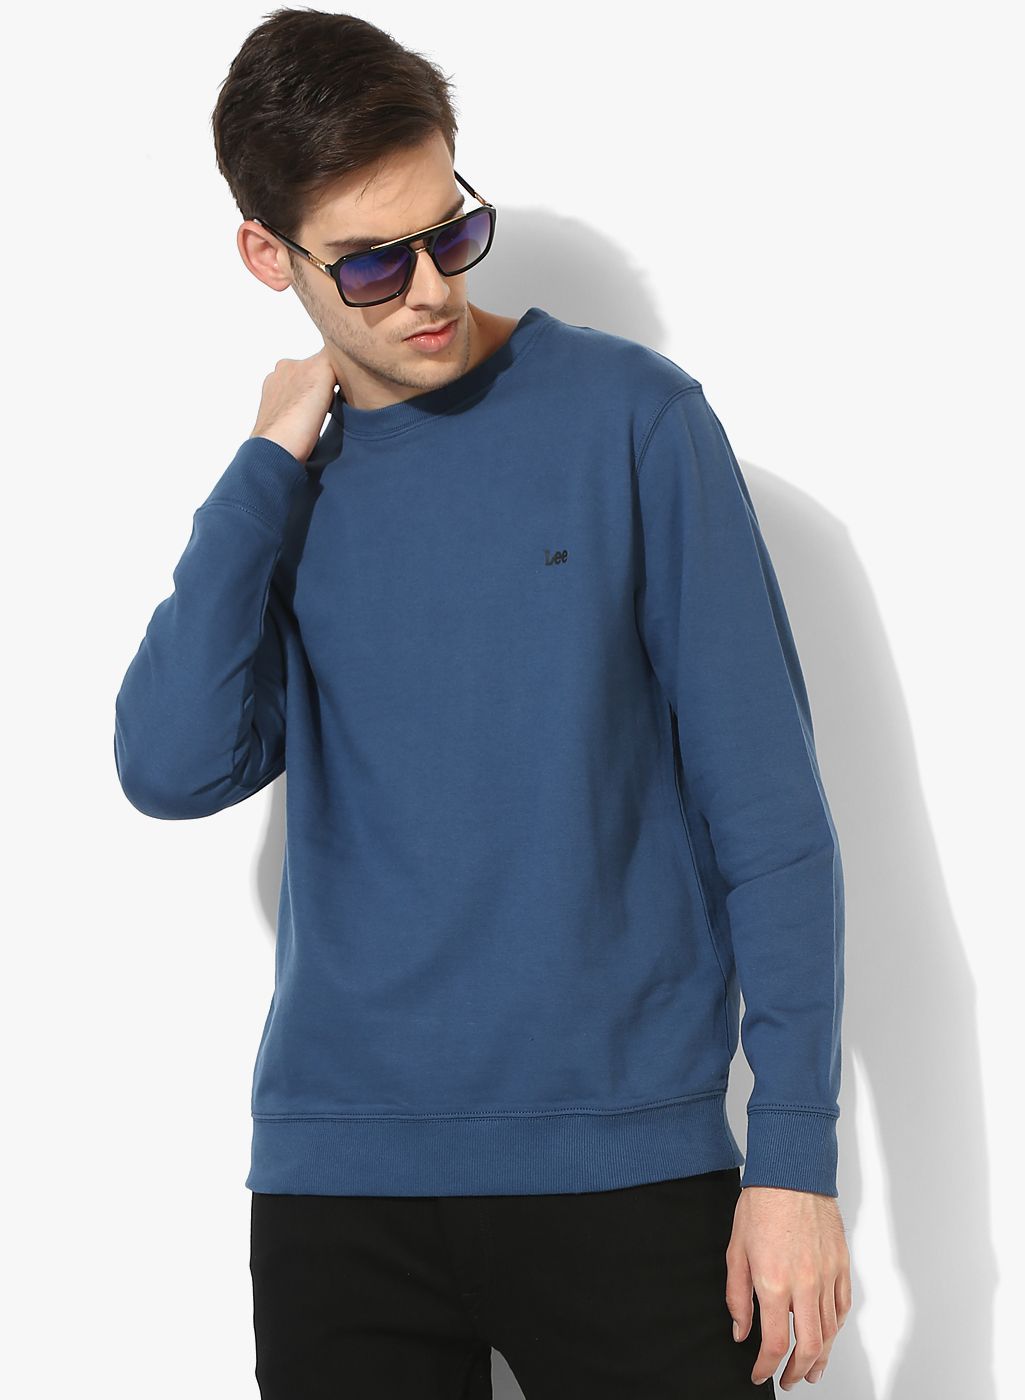 lee sweatshirts online